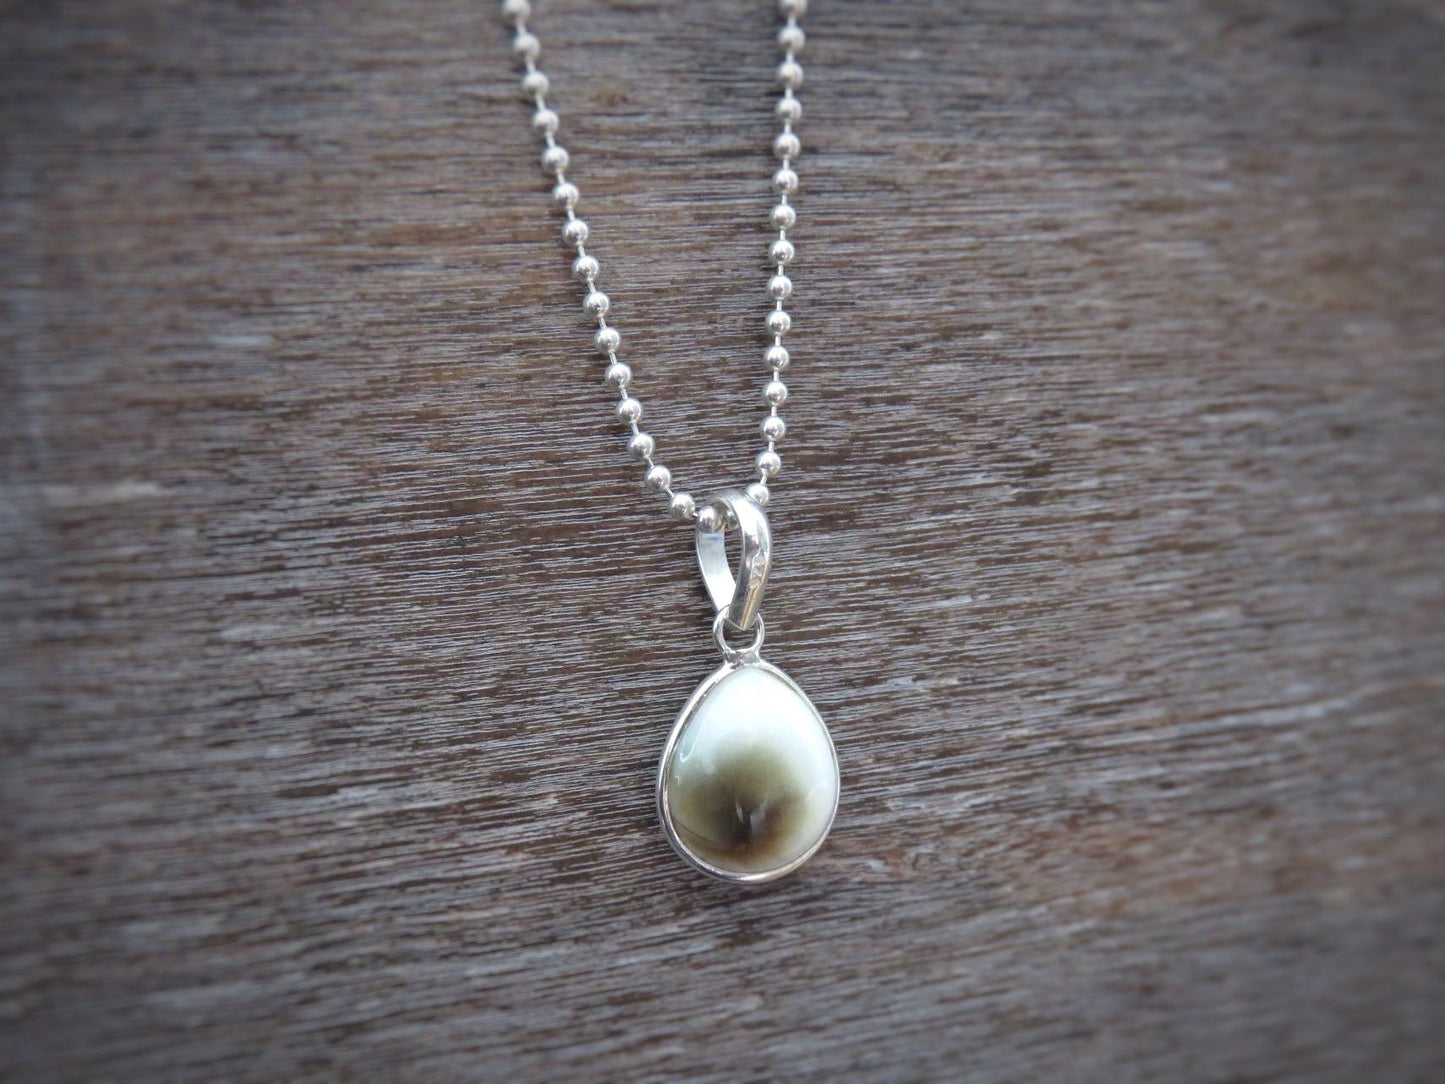 small teardrop-shaped operculum pendant made of silver 